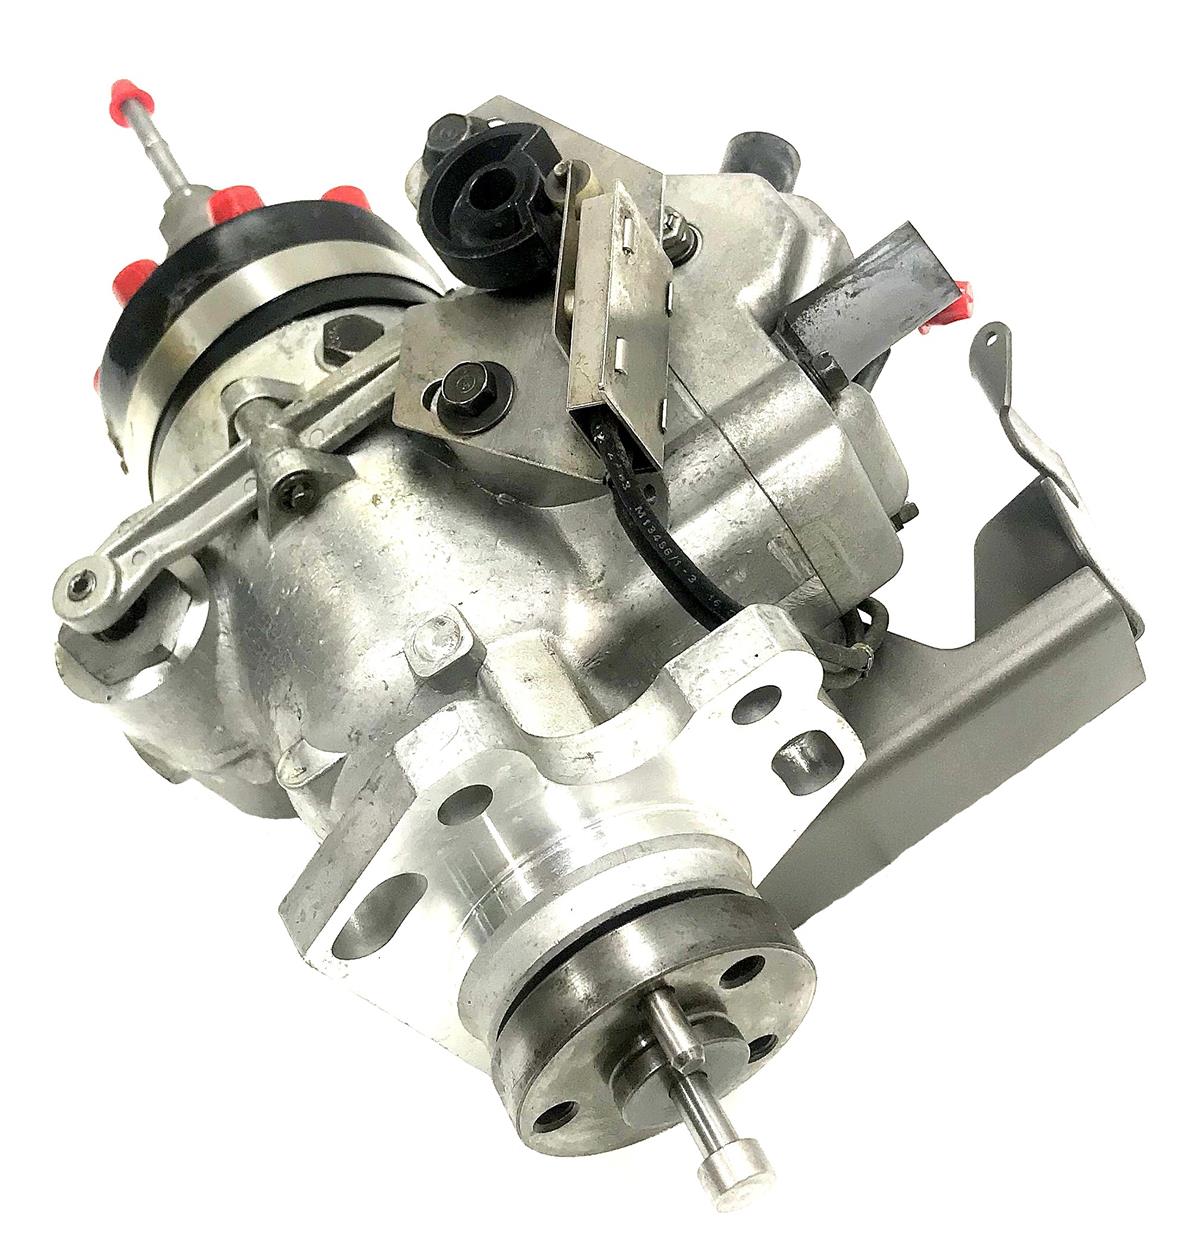 HM-1083 | HM-1083  6.5L Turbo Diesel Fuel Injection Pump With Throttle Position Sensor HMMWV (2).jpeg